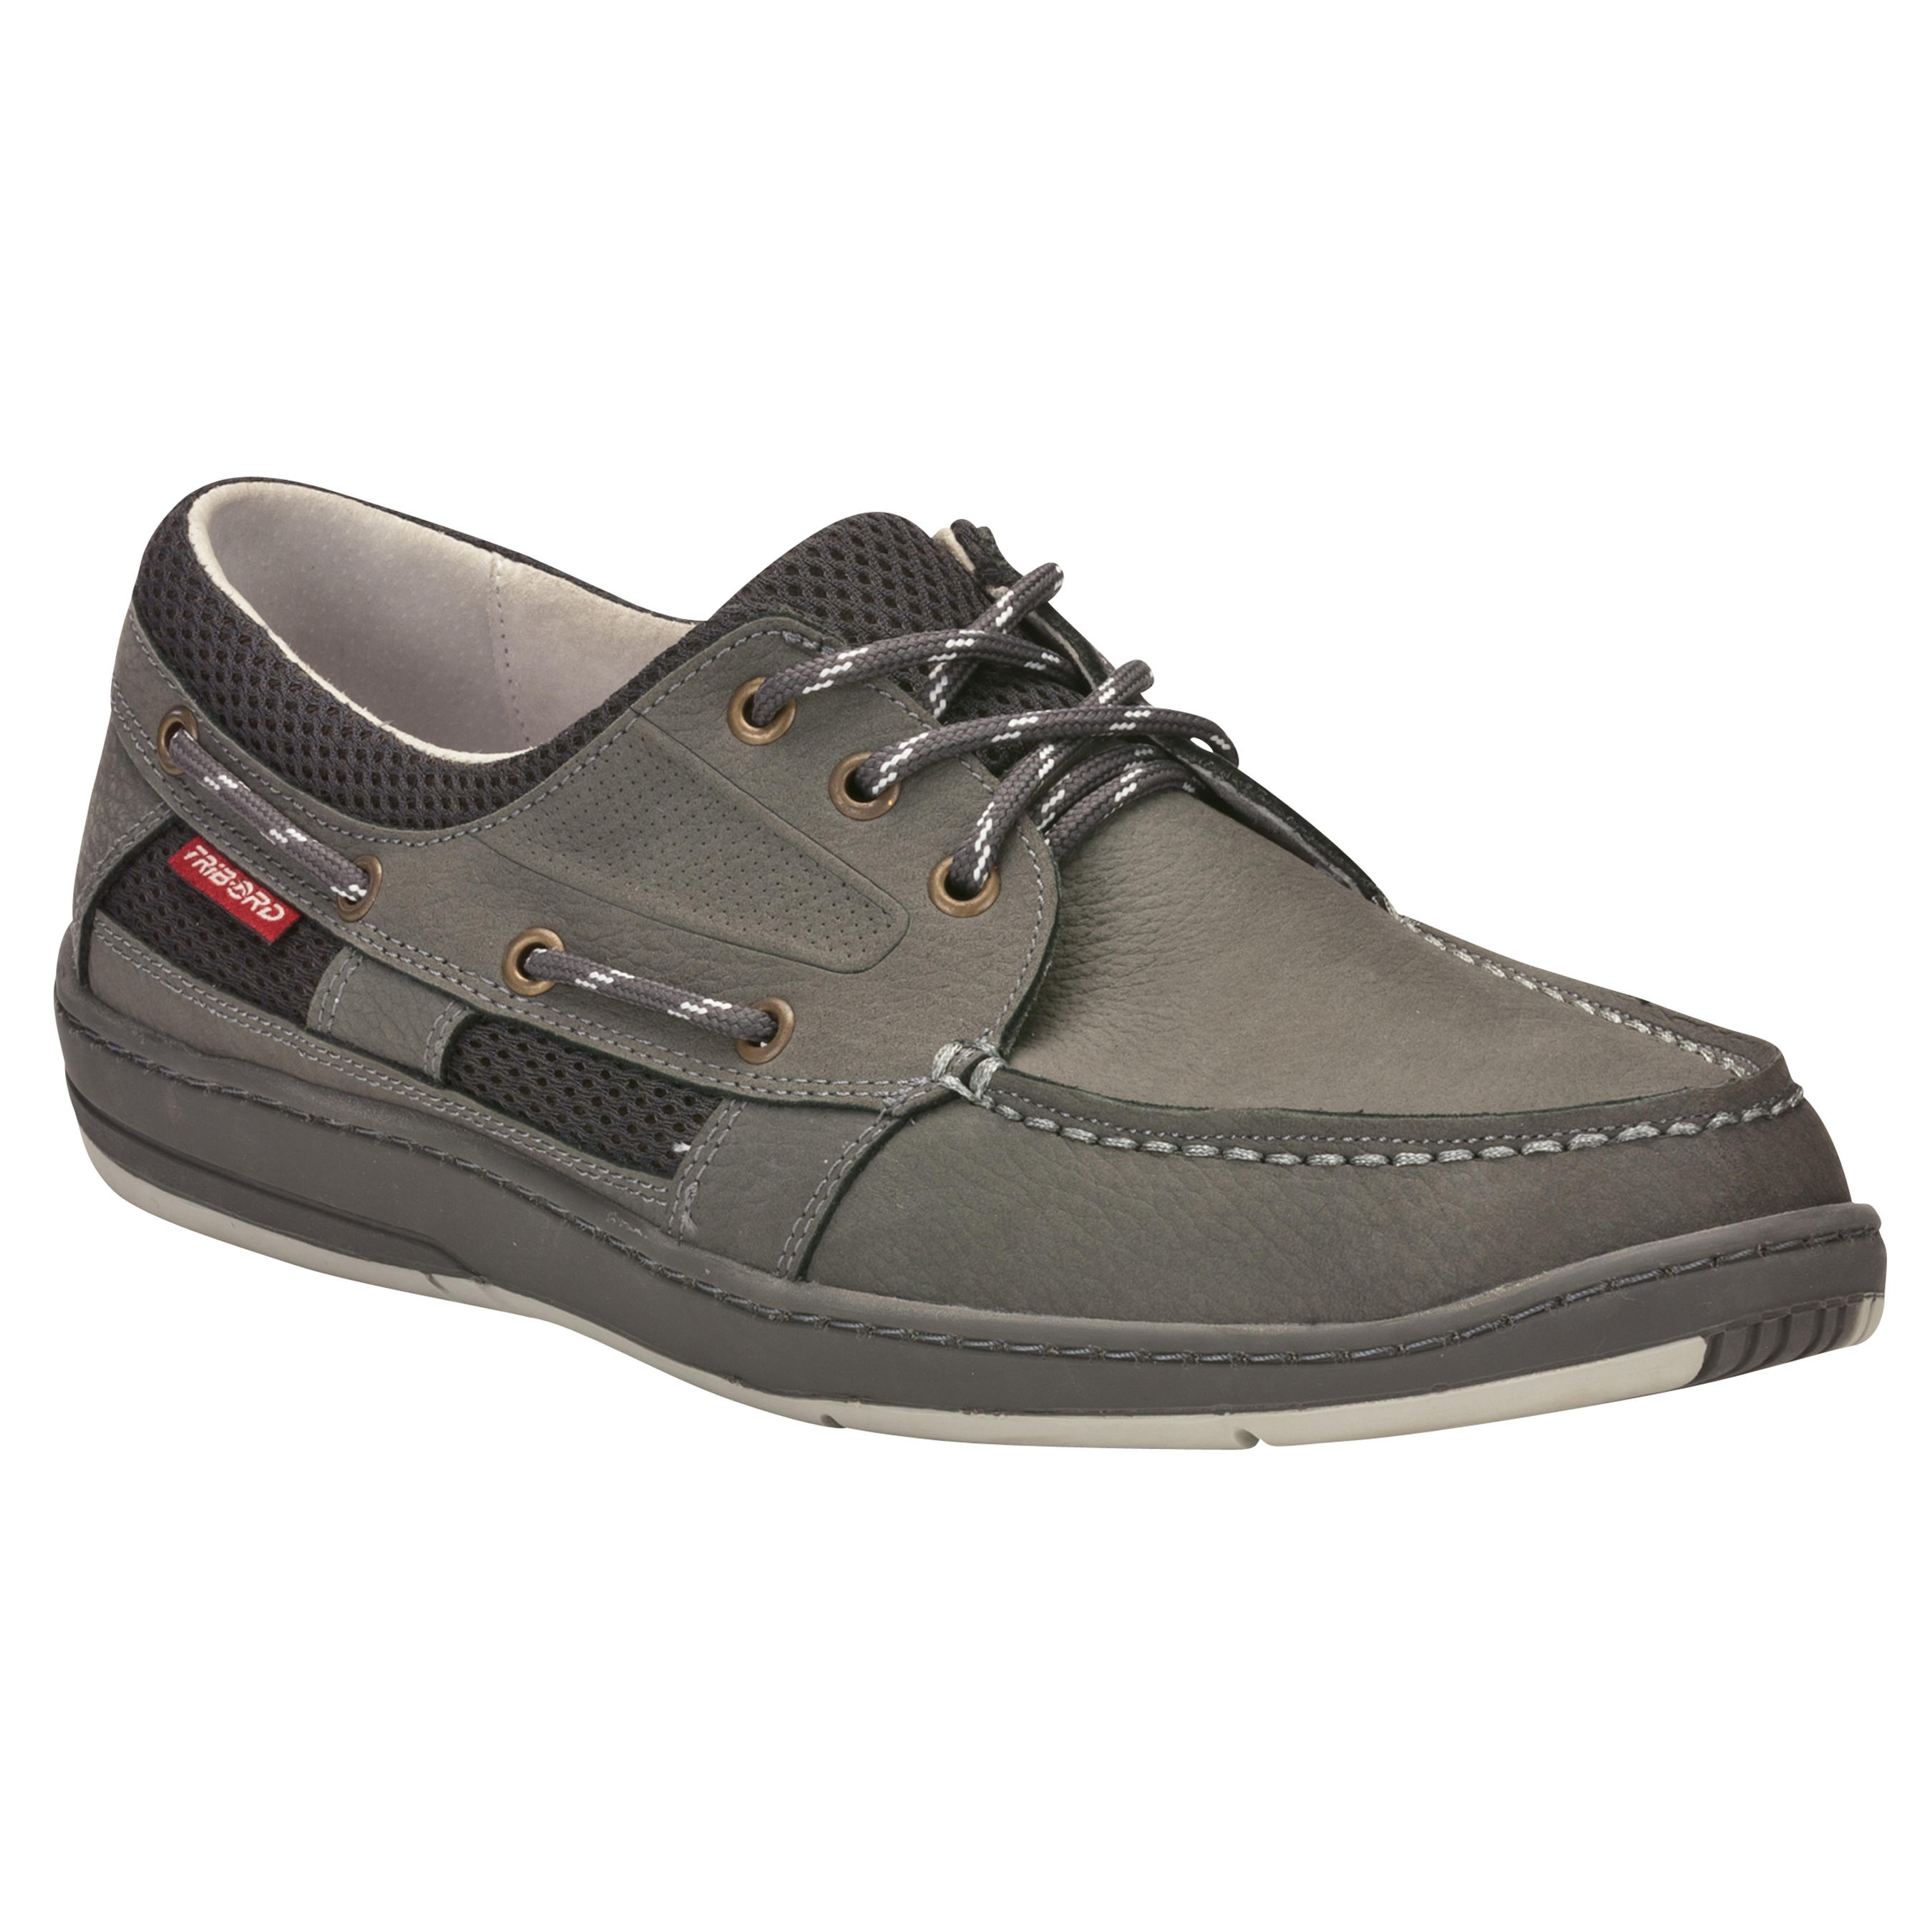 TRIBORD CLIPPER men's boat shoes - Grey